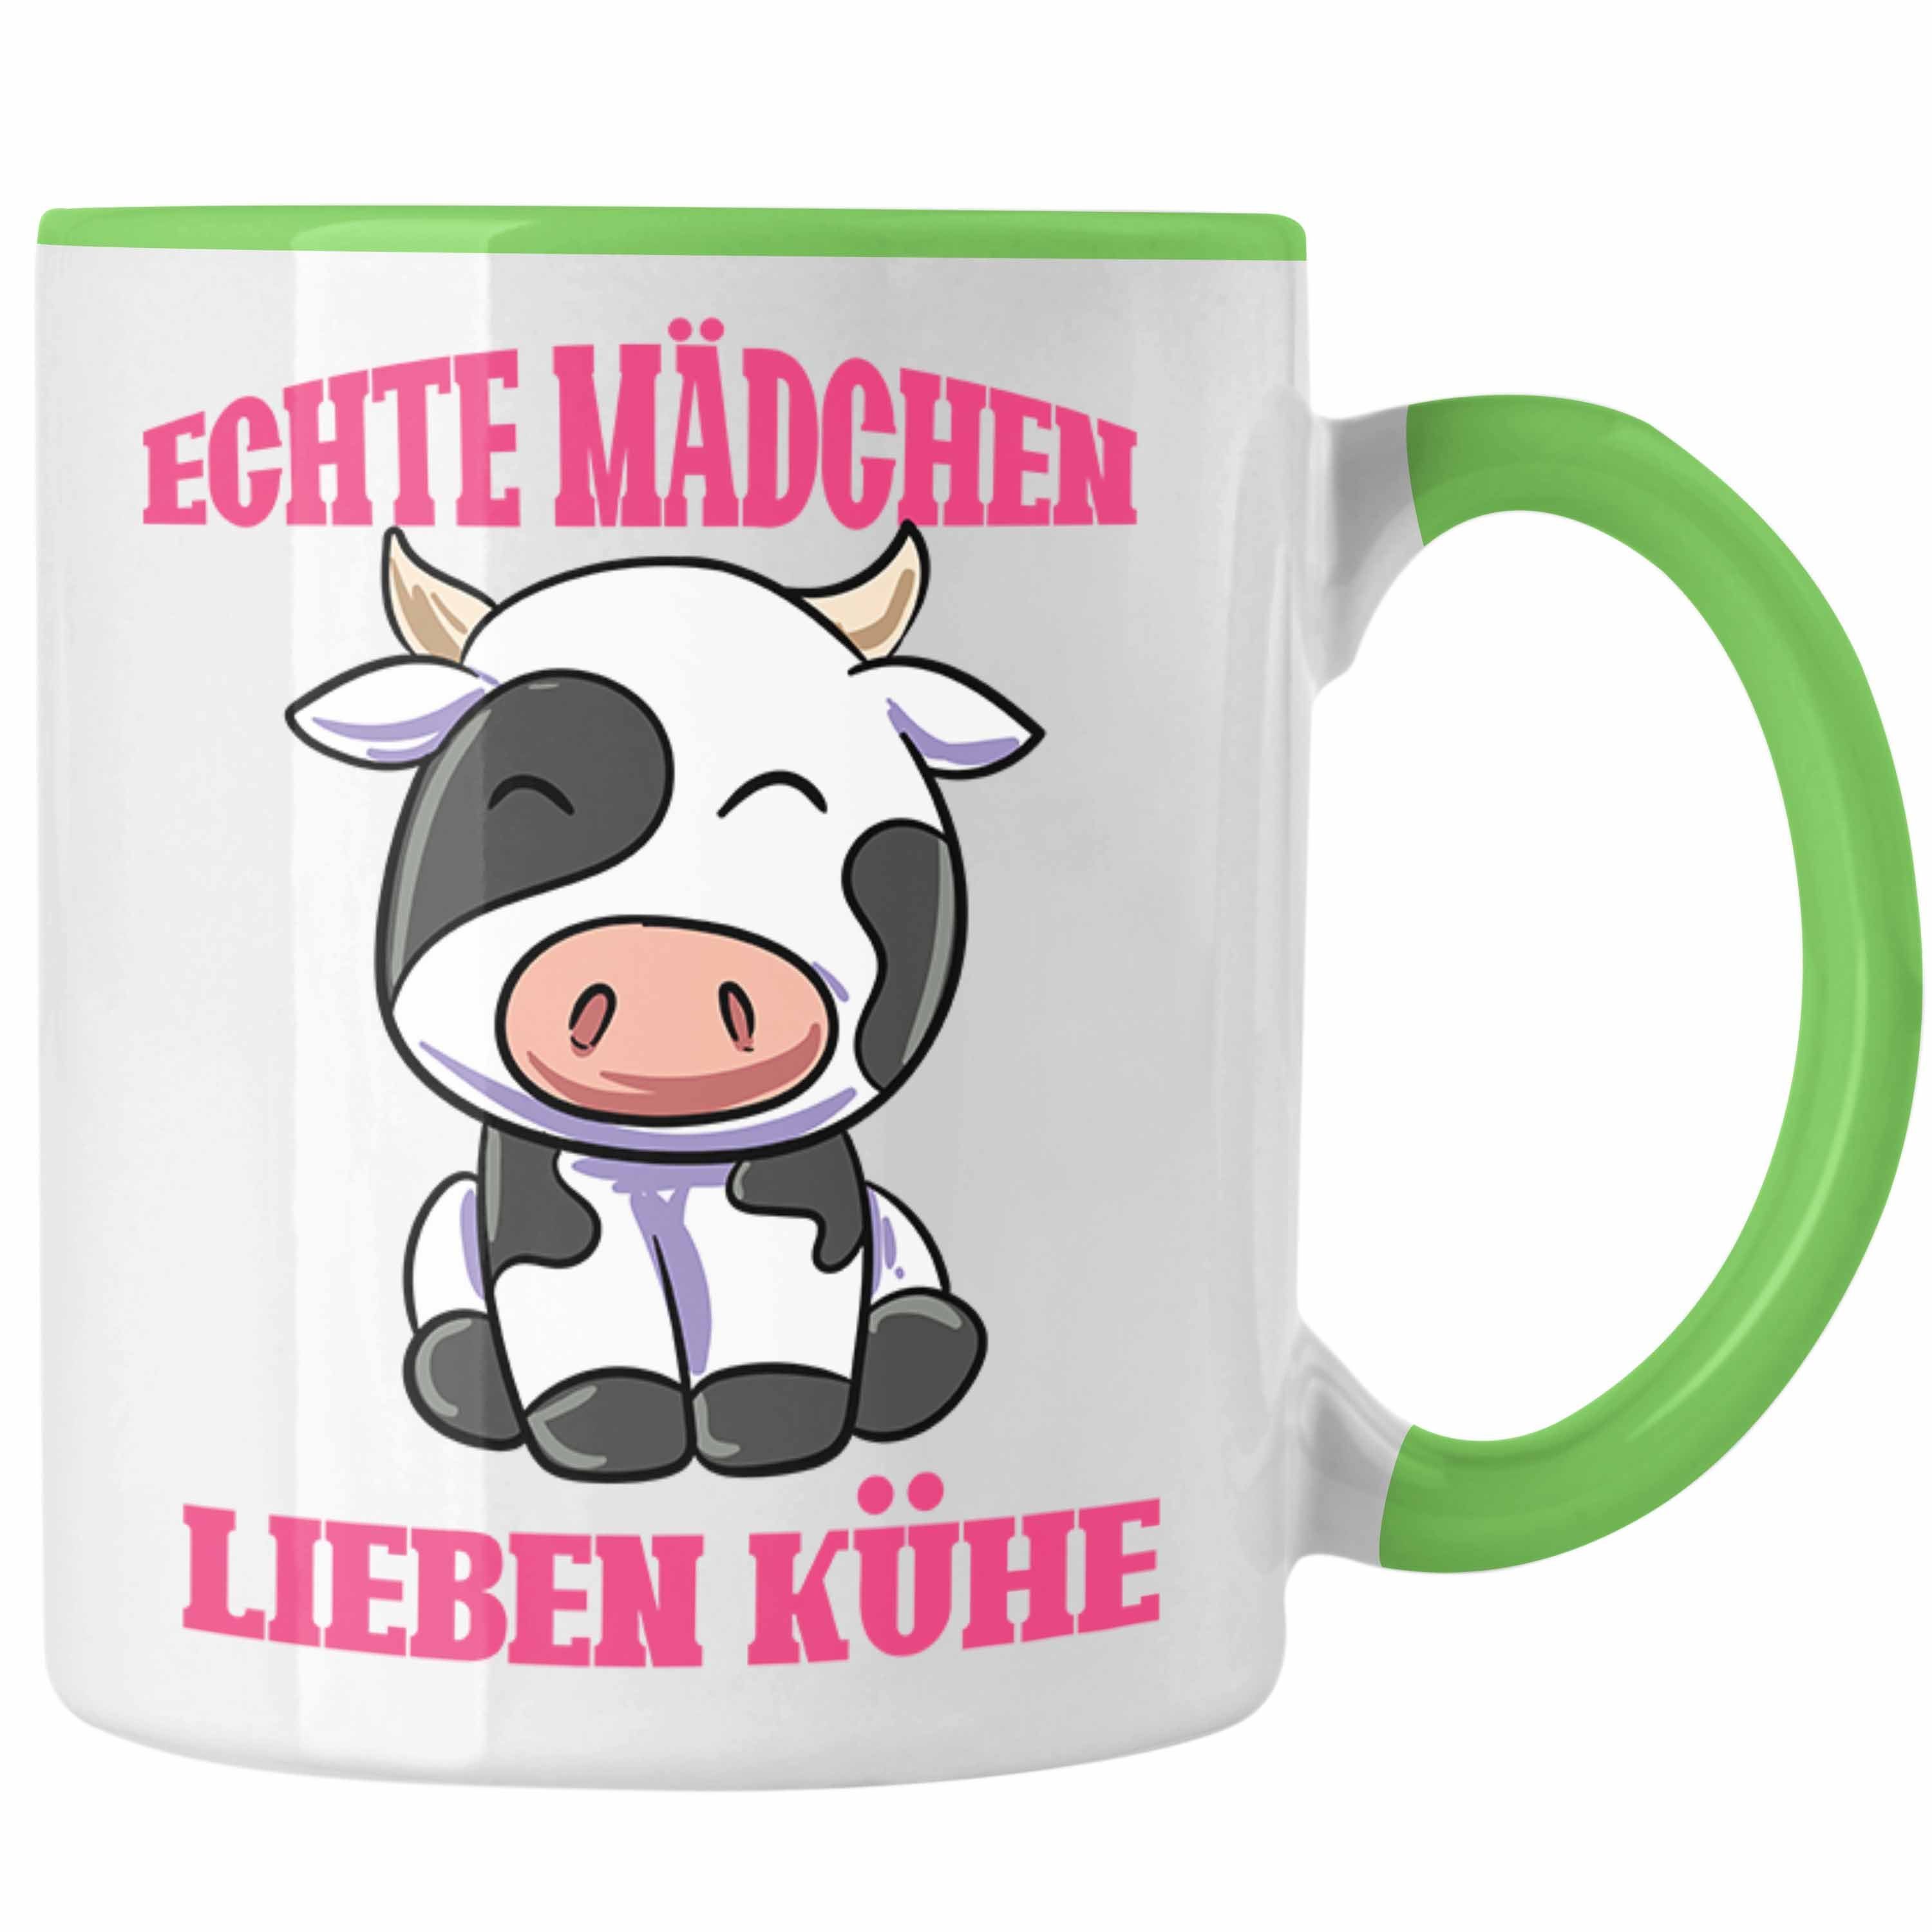 Trendation Tasse Kuh Tasse Geschenk Echte Mädchen Lieben Kühe Landwirtin Bäuerin Gesch Grün